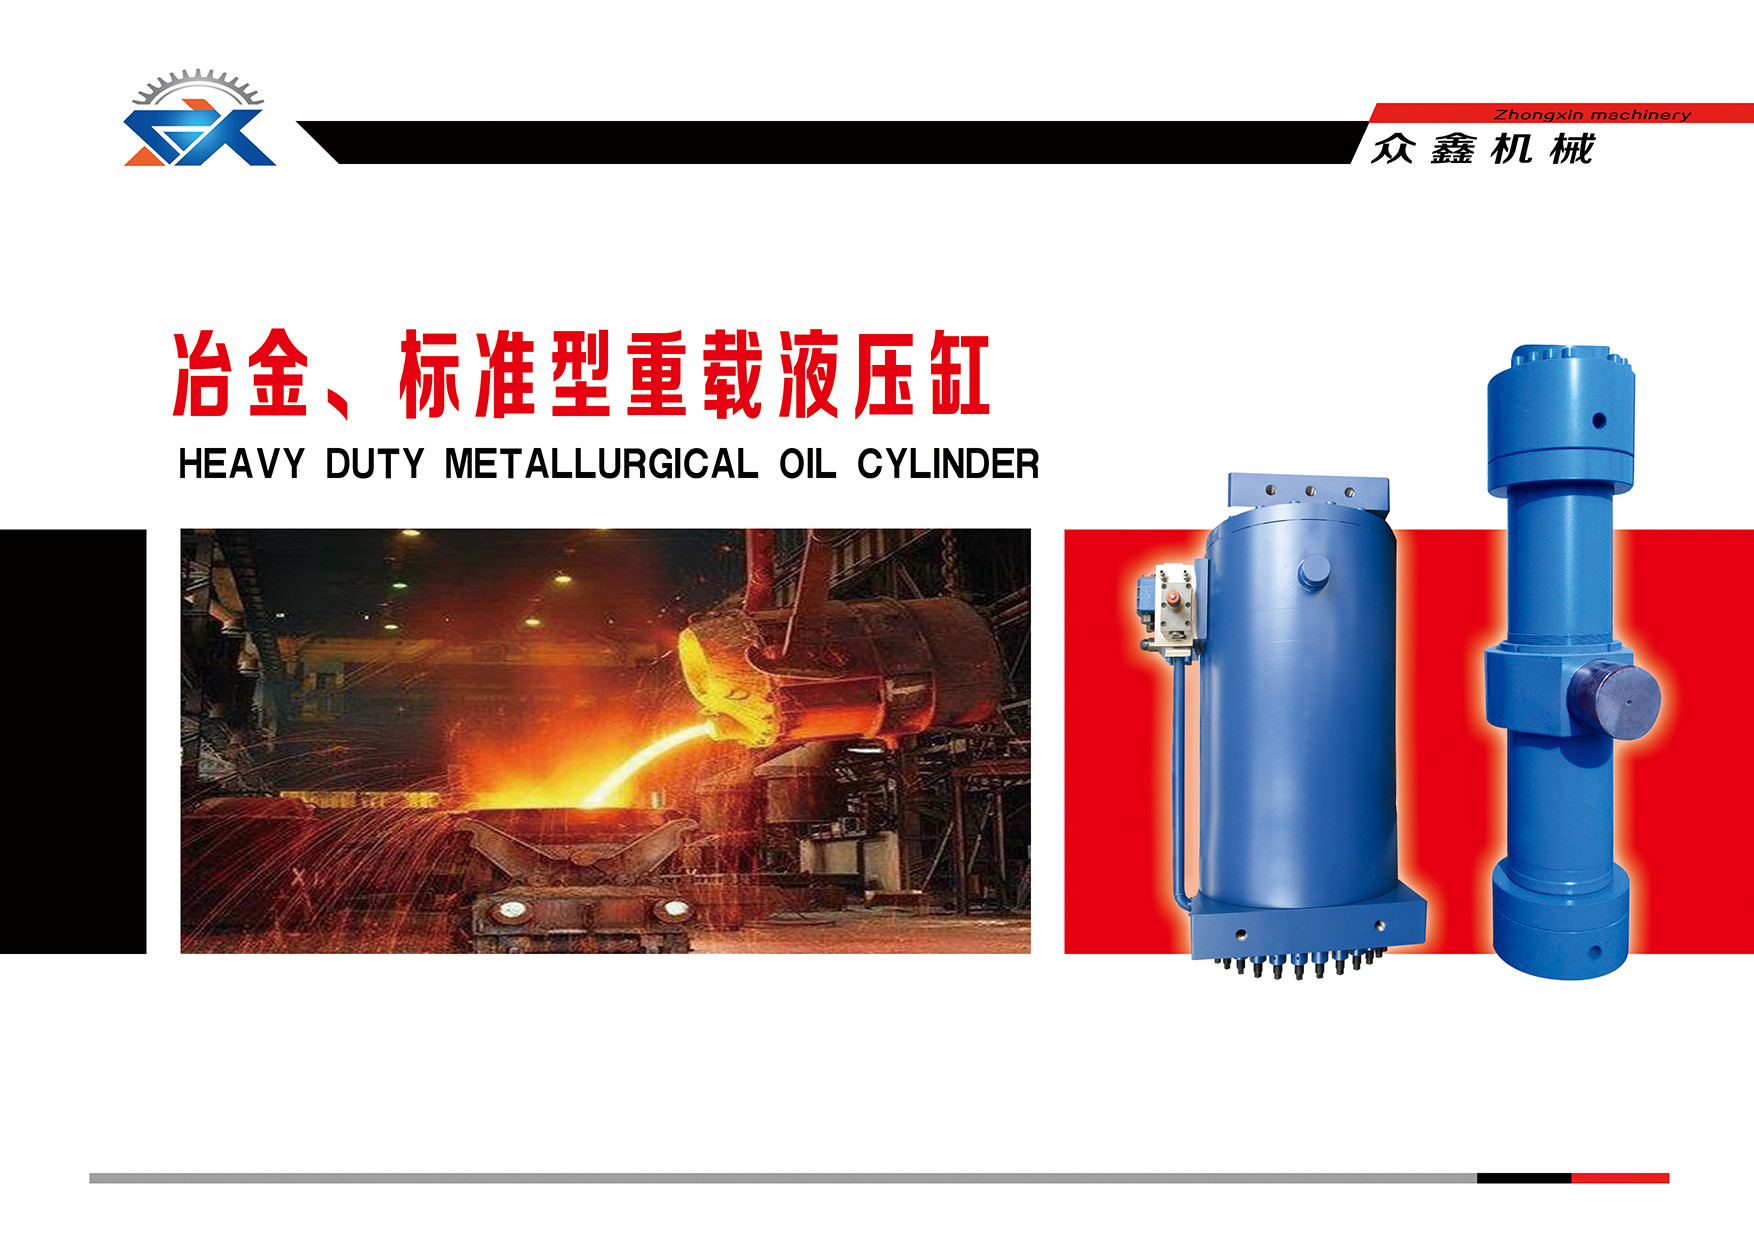 Heavy Duty Metallurgical Oil Cylinder